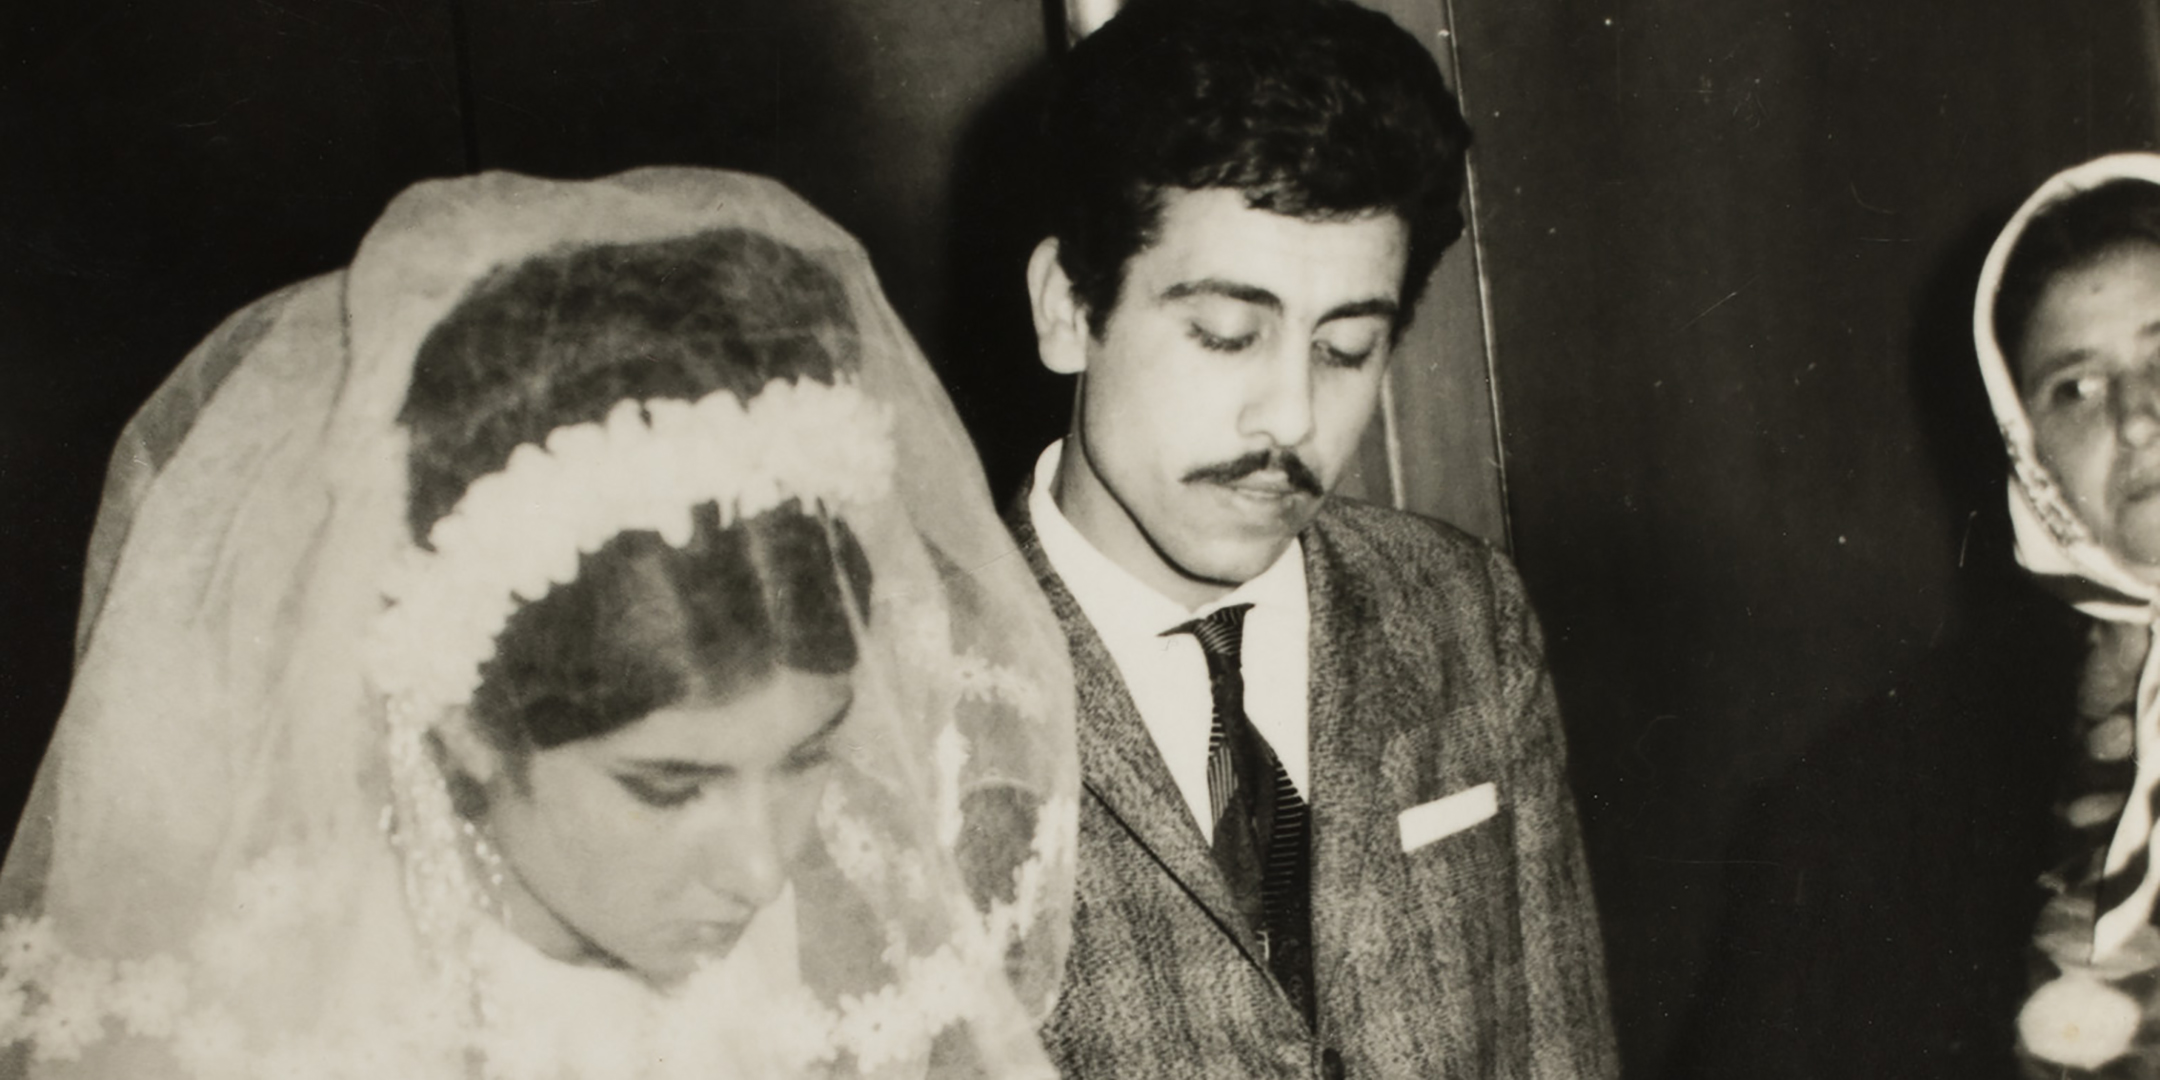 Şükran and Halit Adasal signing their marriage documents, with Şükran’s mother Sultan Salman at far right, Adana, Turkey, 1966. Reproduced courtesy Hale Adasal.